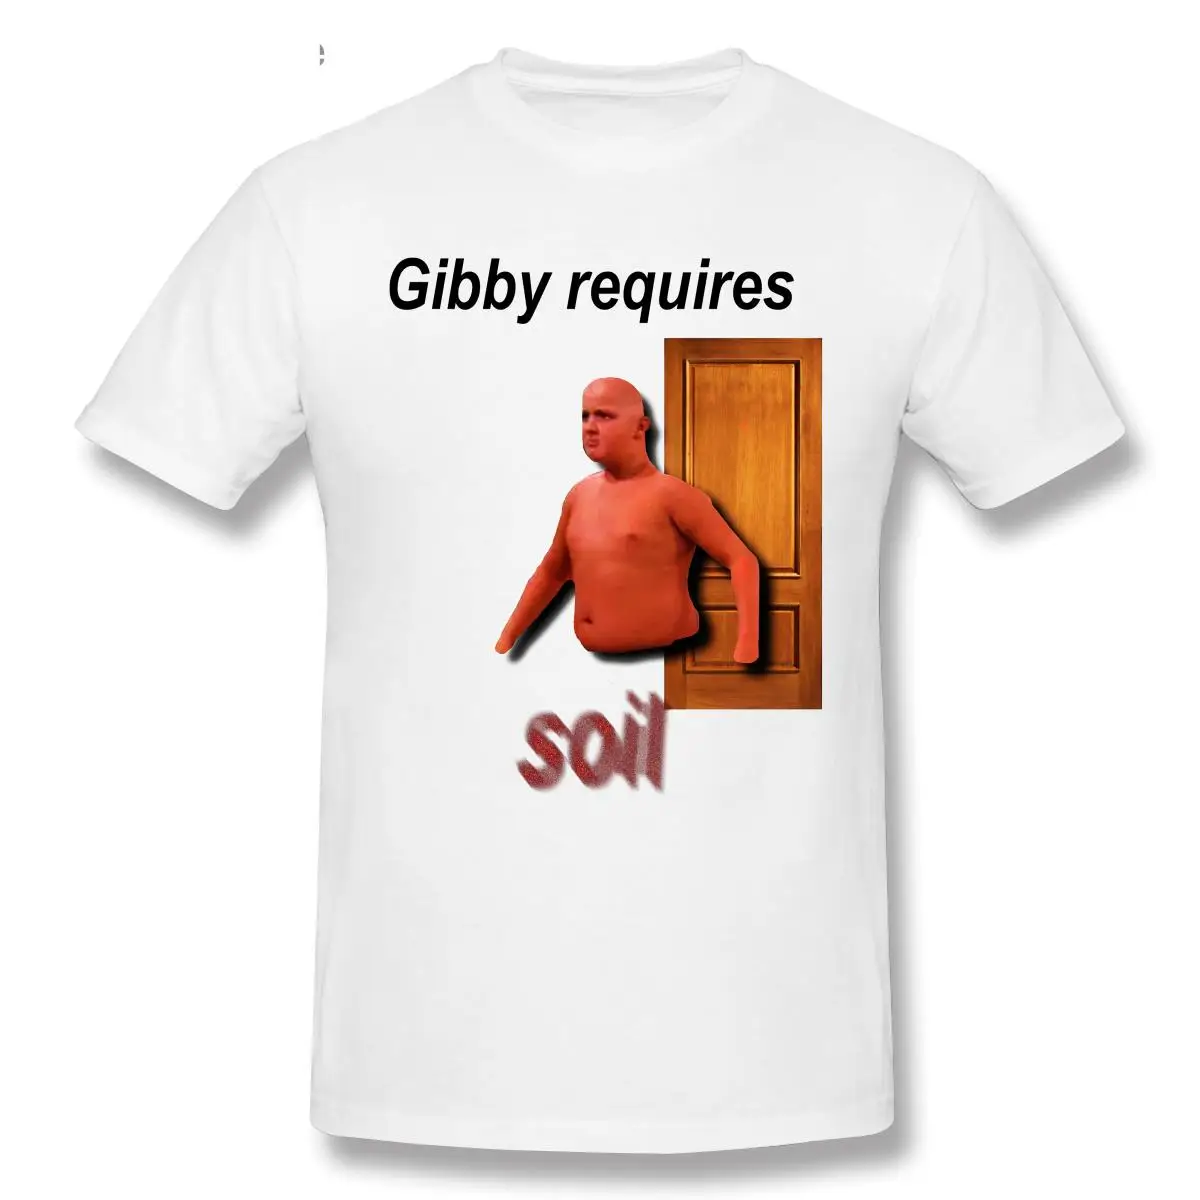 

Gibby Requires Soil Unisex T Shirt Men Tshirt Cotton T-shirt Summer Fashion Shirts Short Sleeve Tops Summer Gift